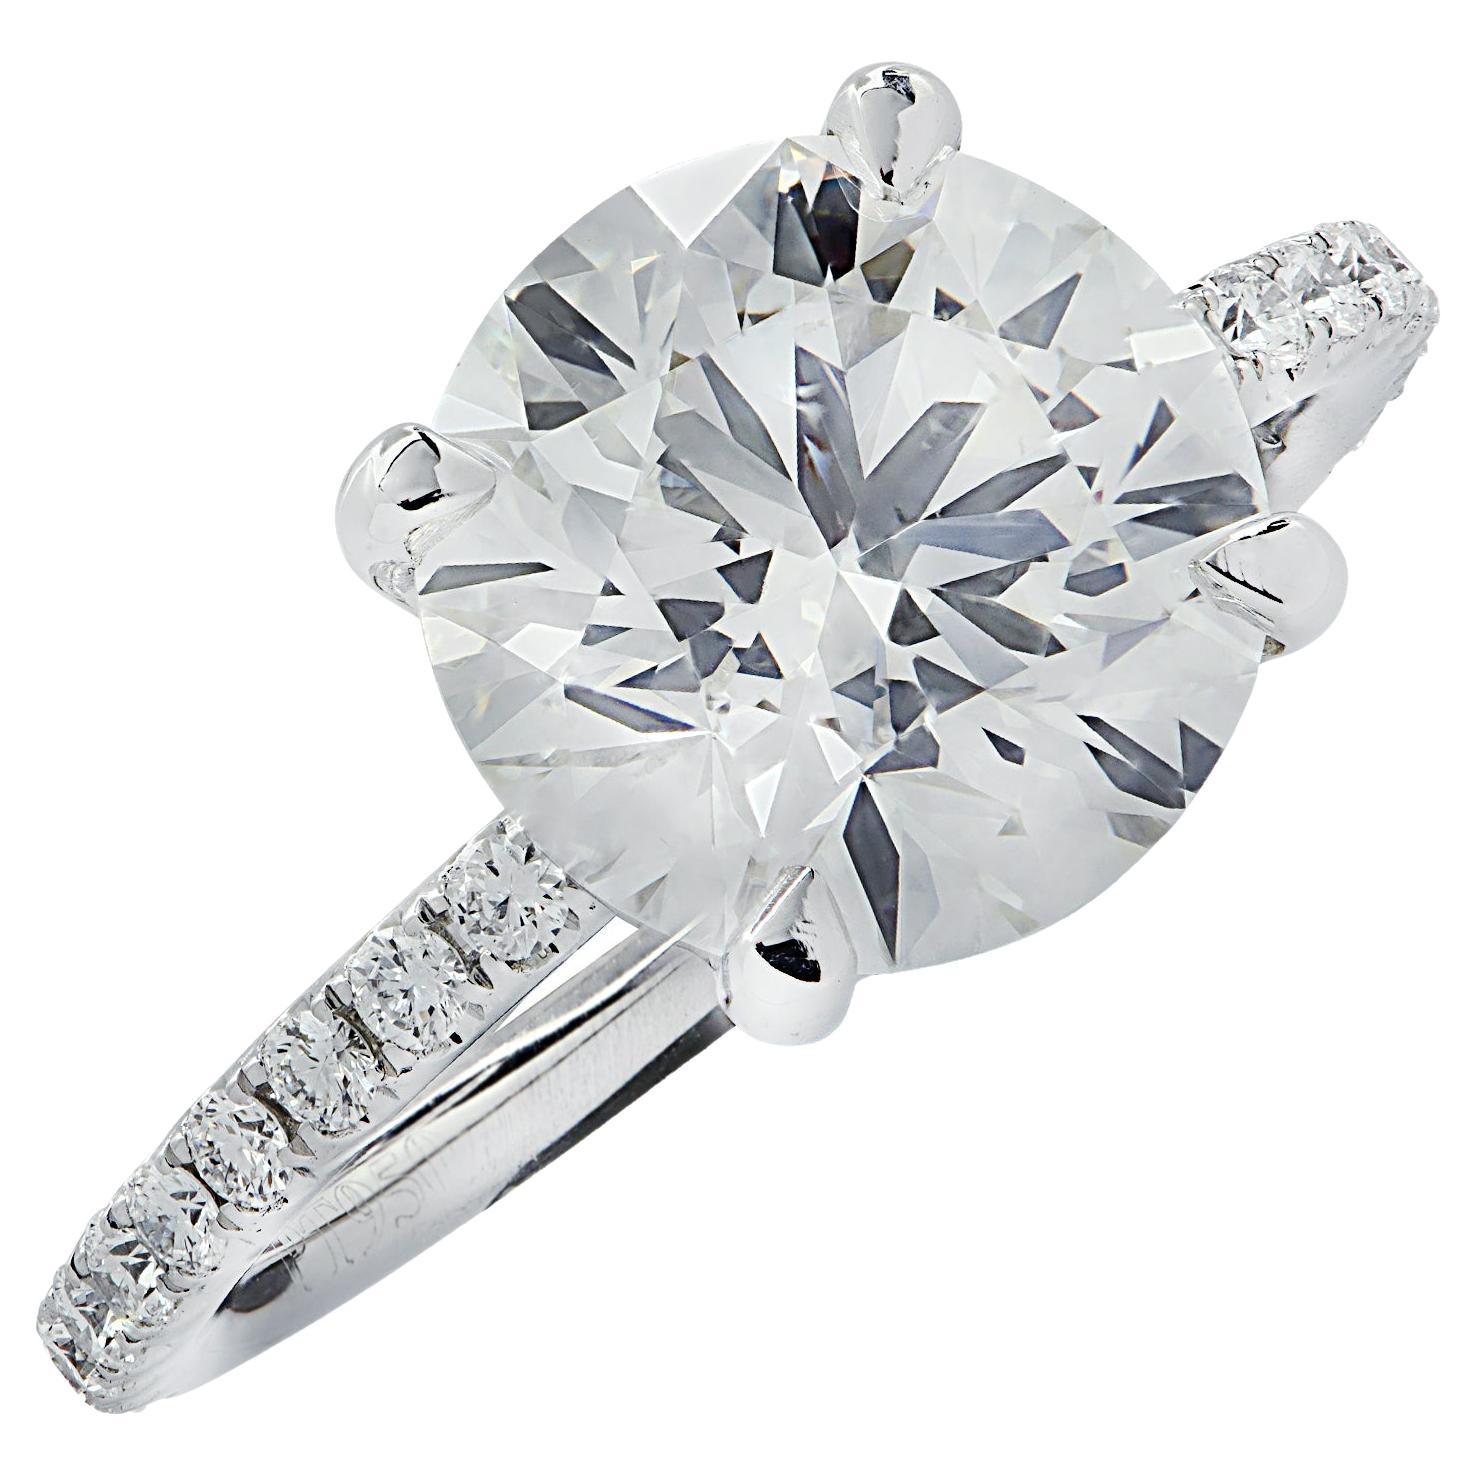 Vivid Diamonds GIA Certified 3.56 Carat Diamond Engagement Ring